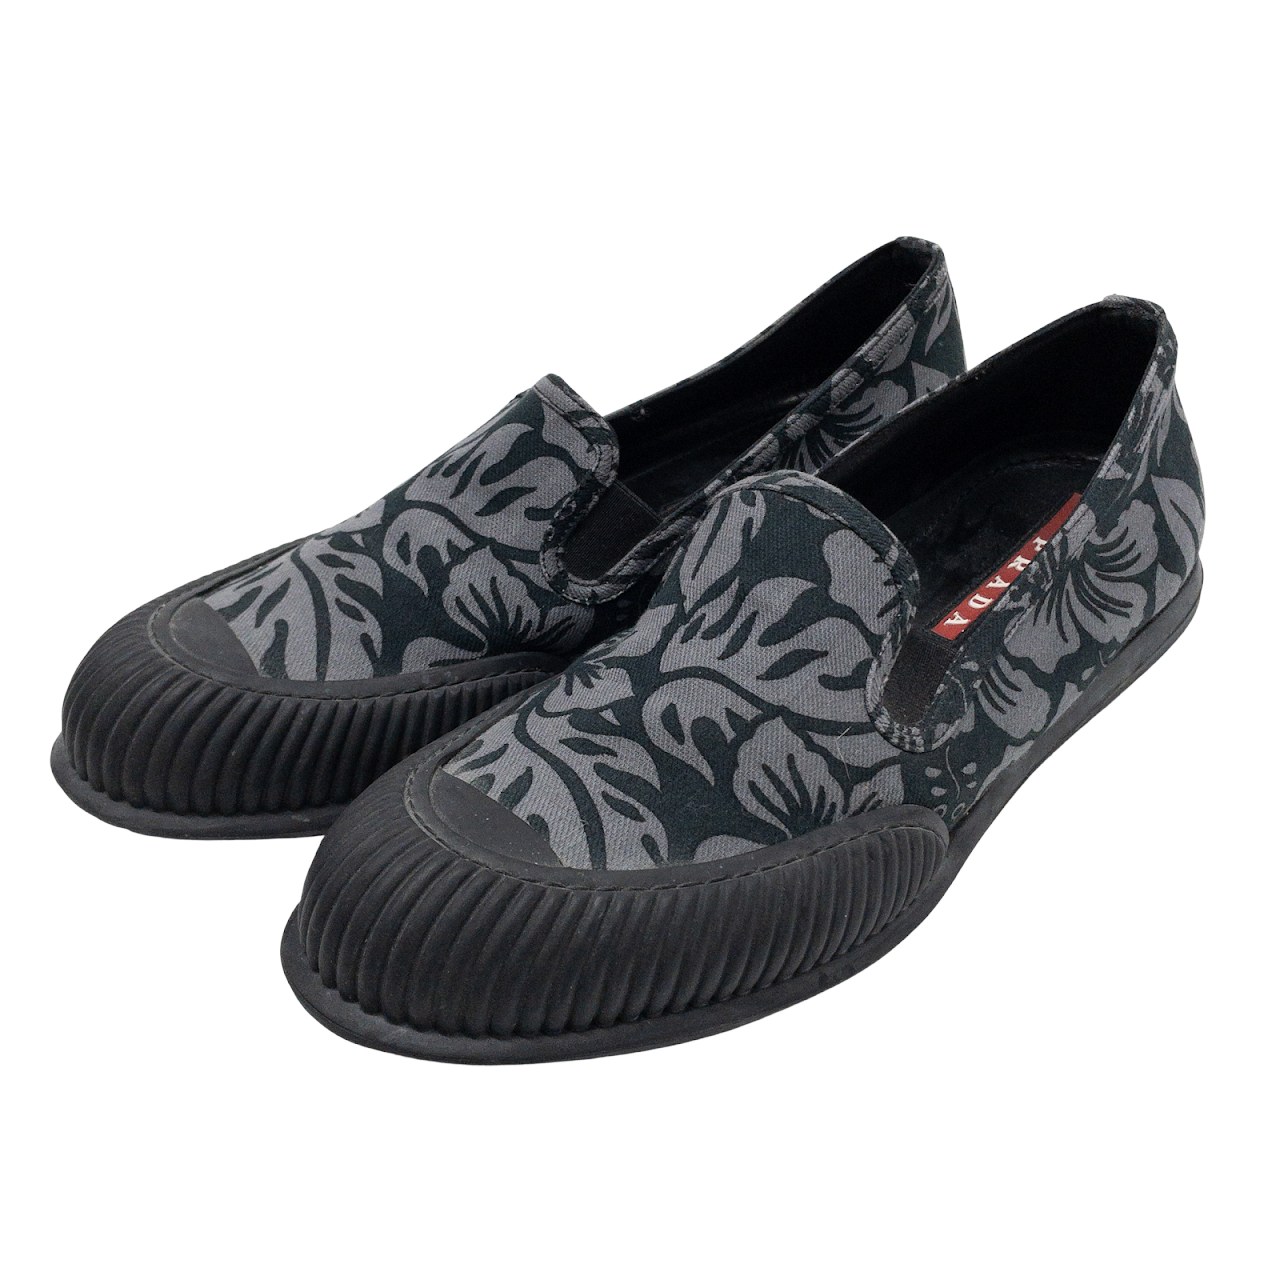 Prada Canvas Black & Grey Hibiscus Sneakers